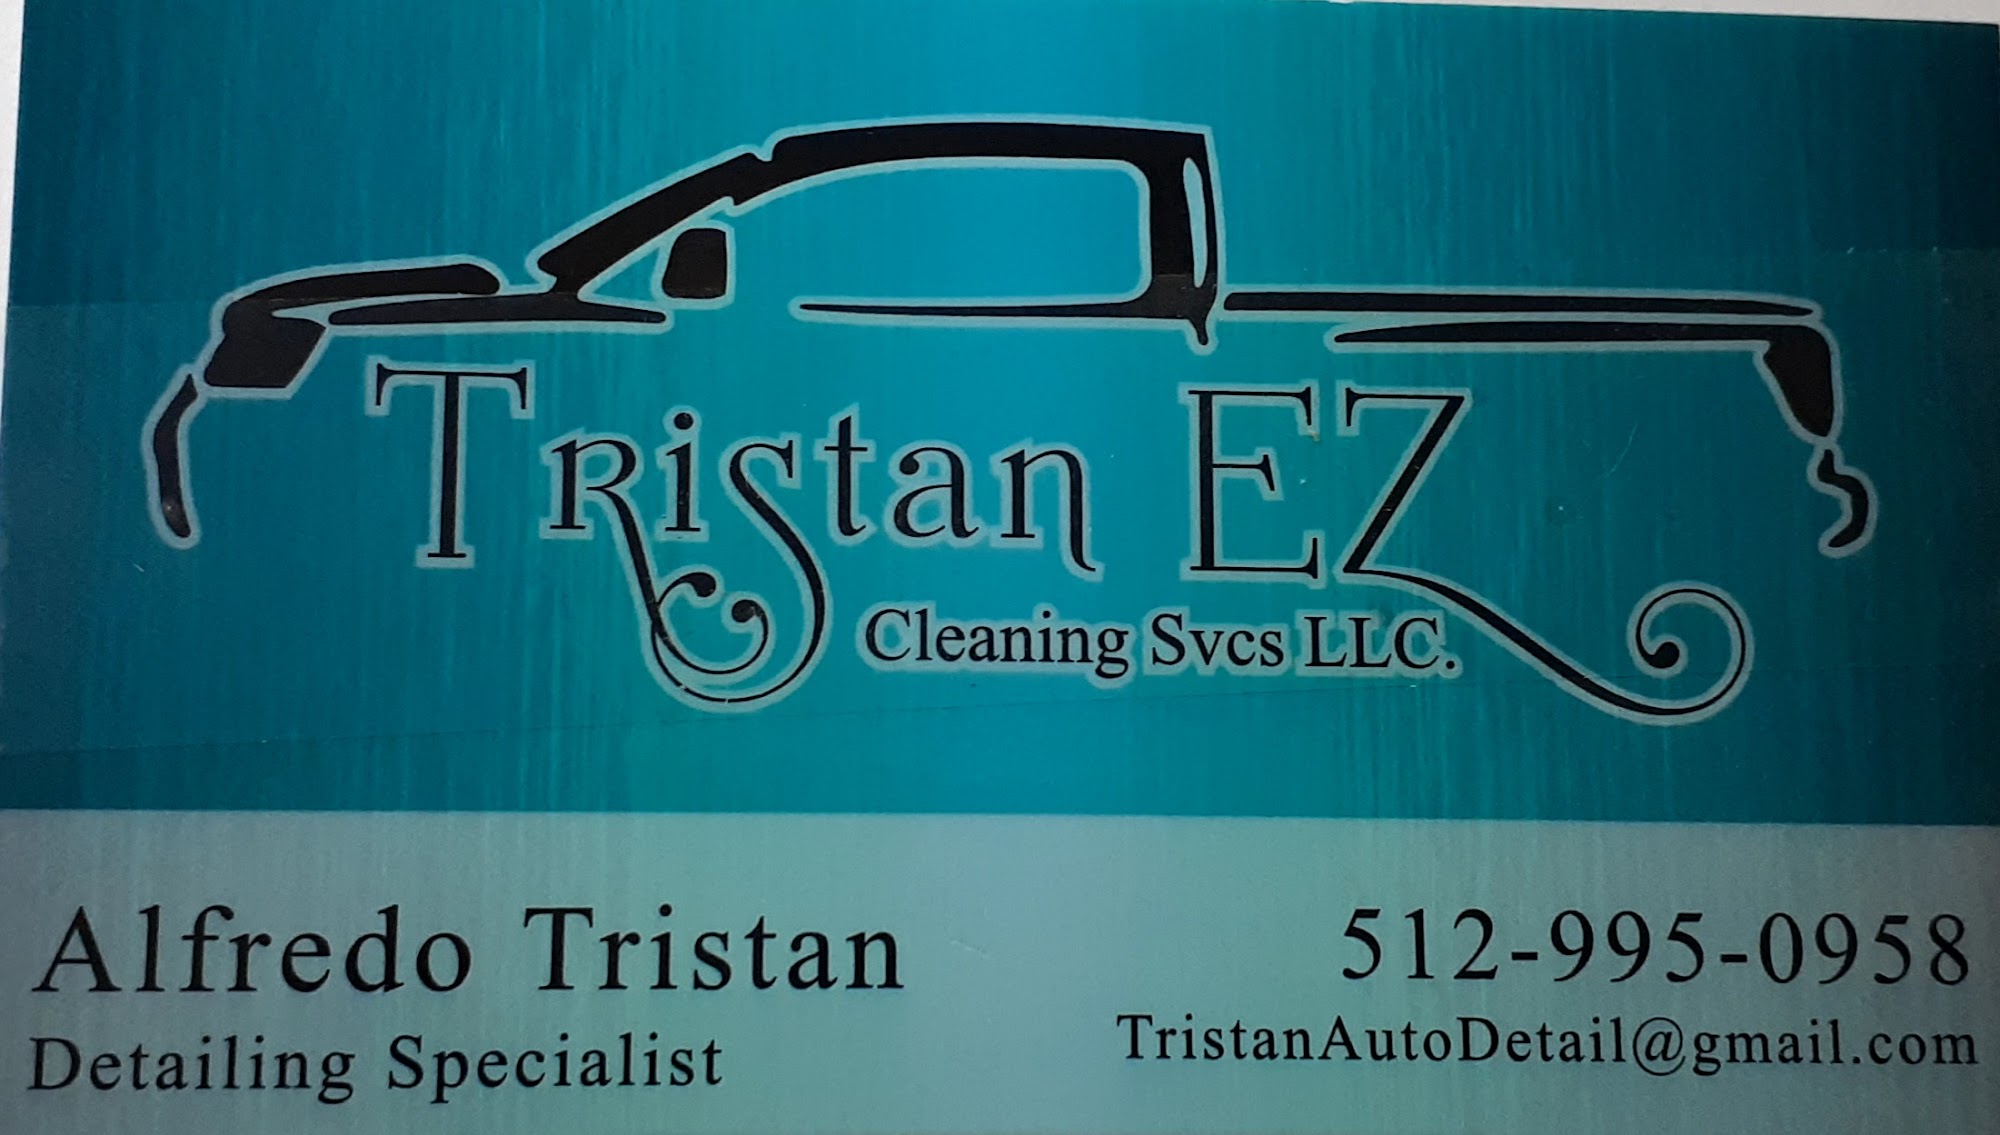 Tristan EZ Cleaning Svcs LLC Lockhart Texas 